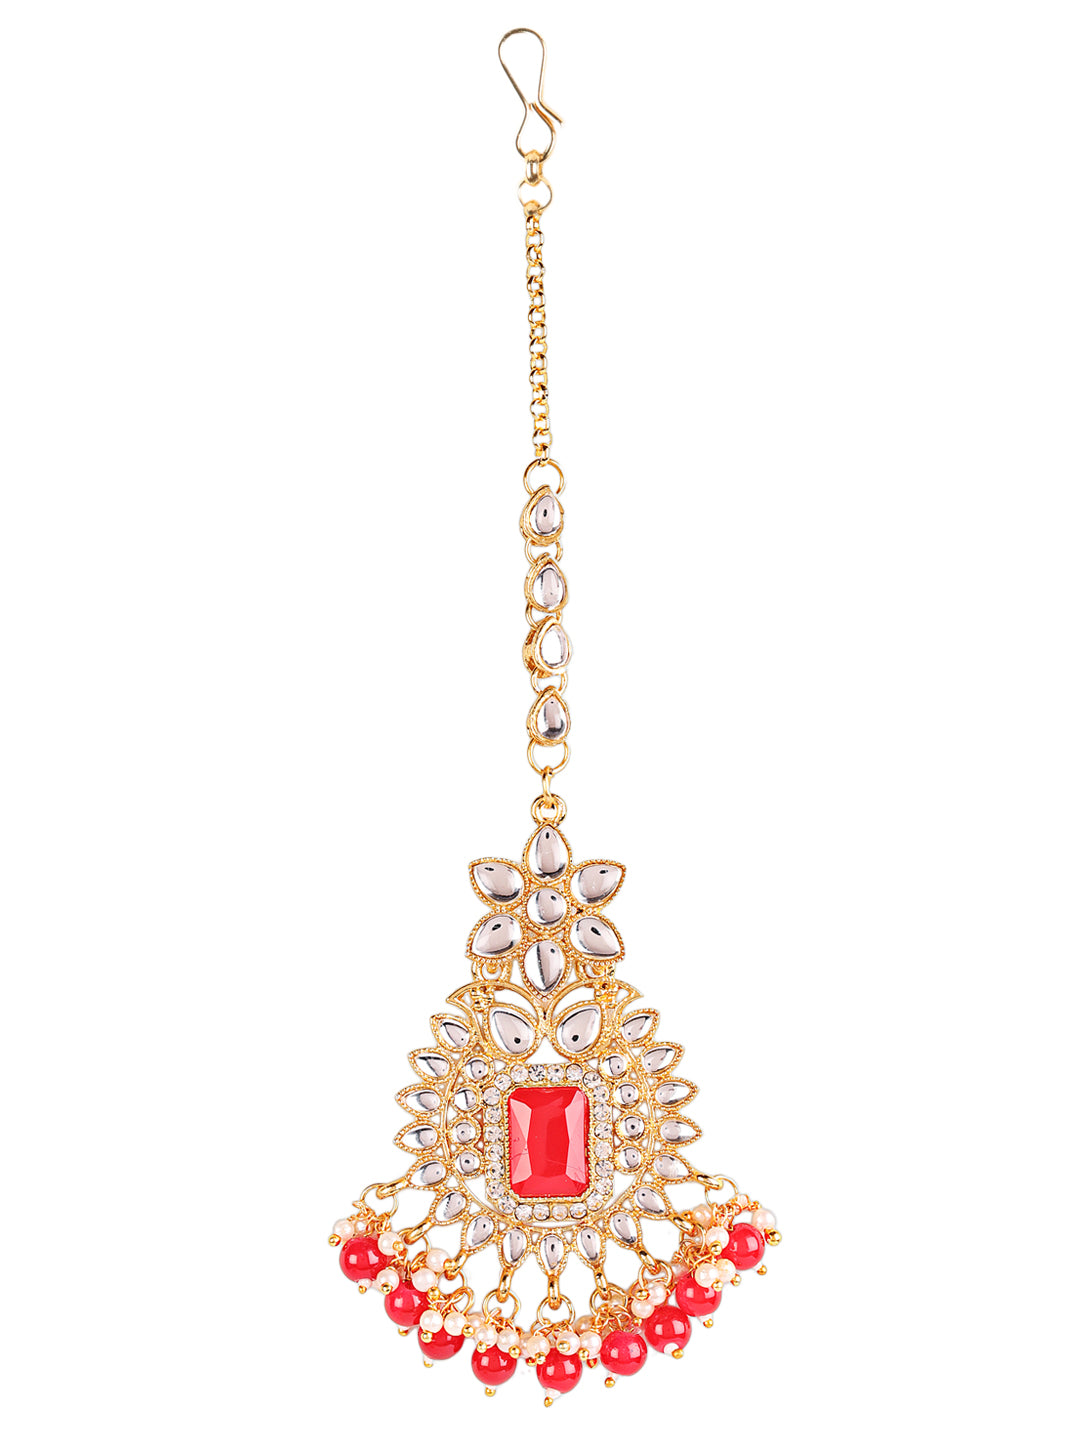 Mahroon Gold-Plated & Pearl Beaded Kundan Choker Necklace, Earring & Maangtikka Set